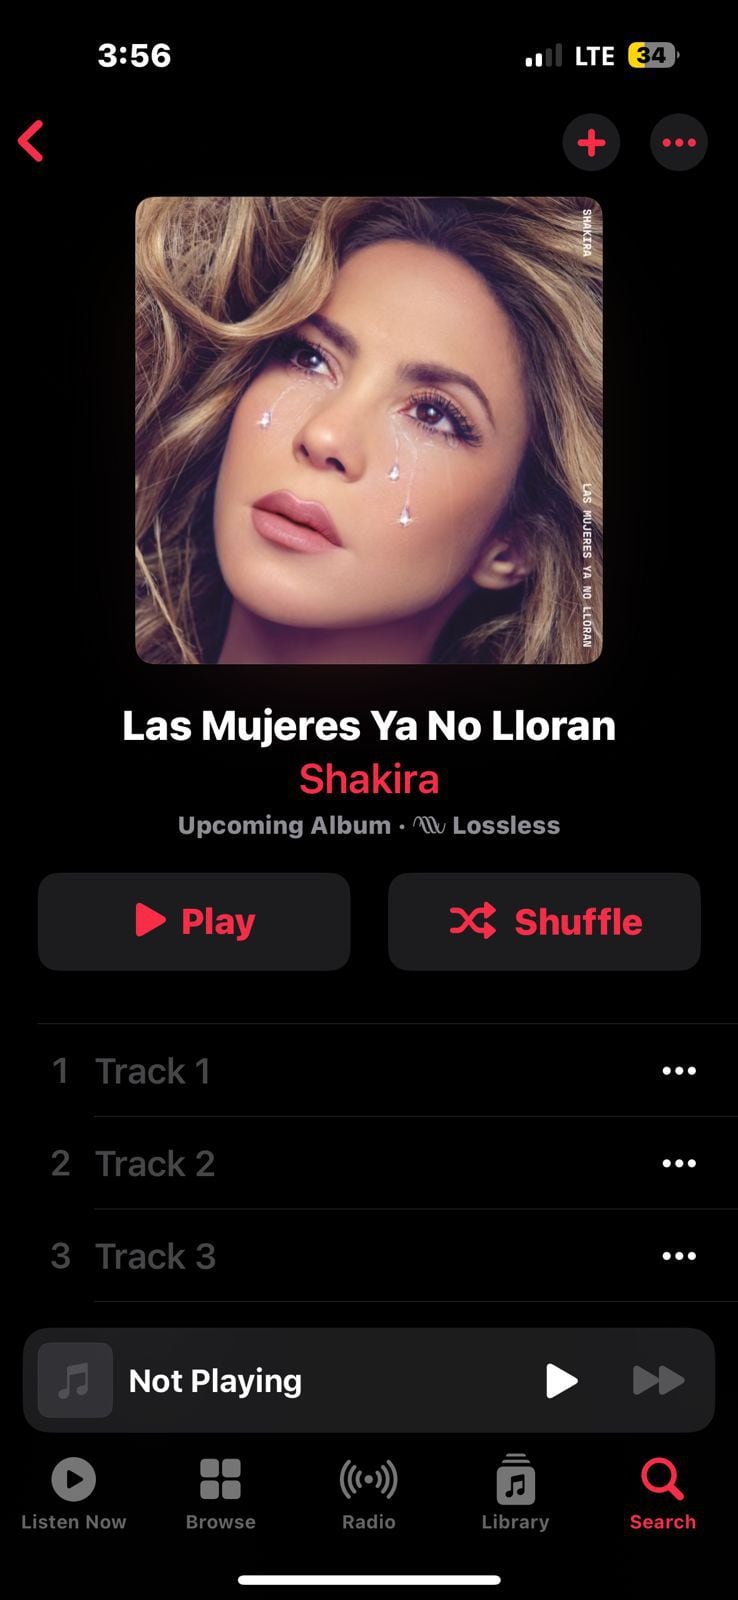 El álbum de Shakira también estará en Apple Music. (Apple Music)